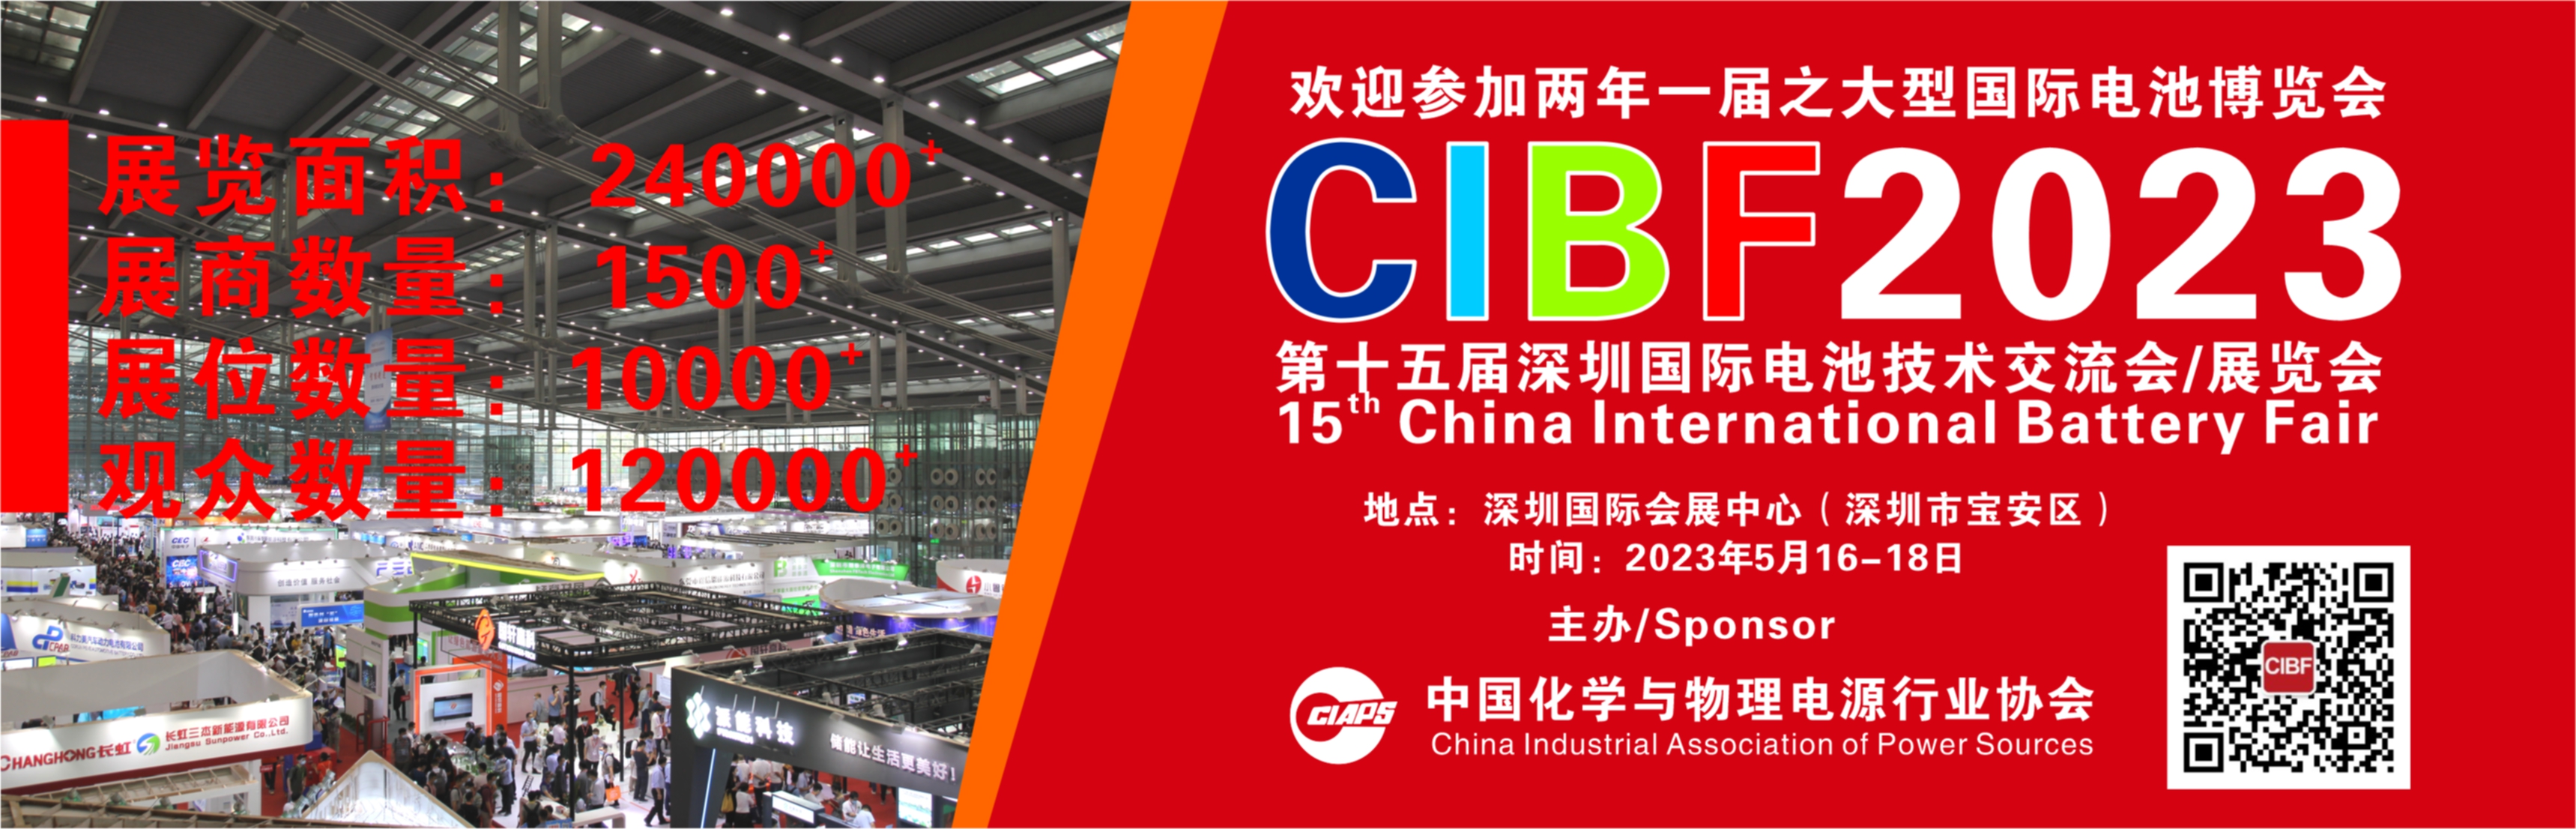 CIBF2023国际先进电池前沿技术研讨会征稿通知